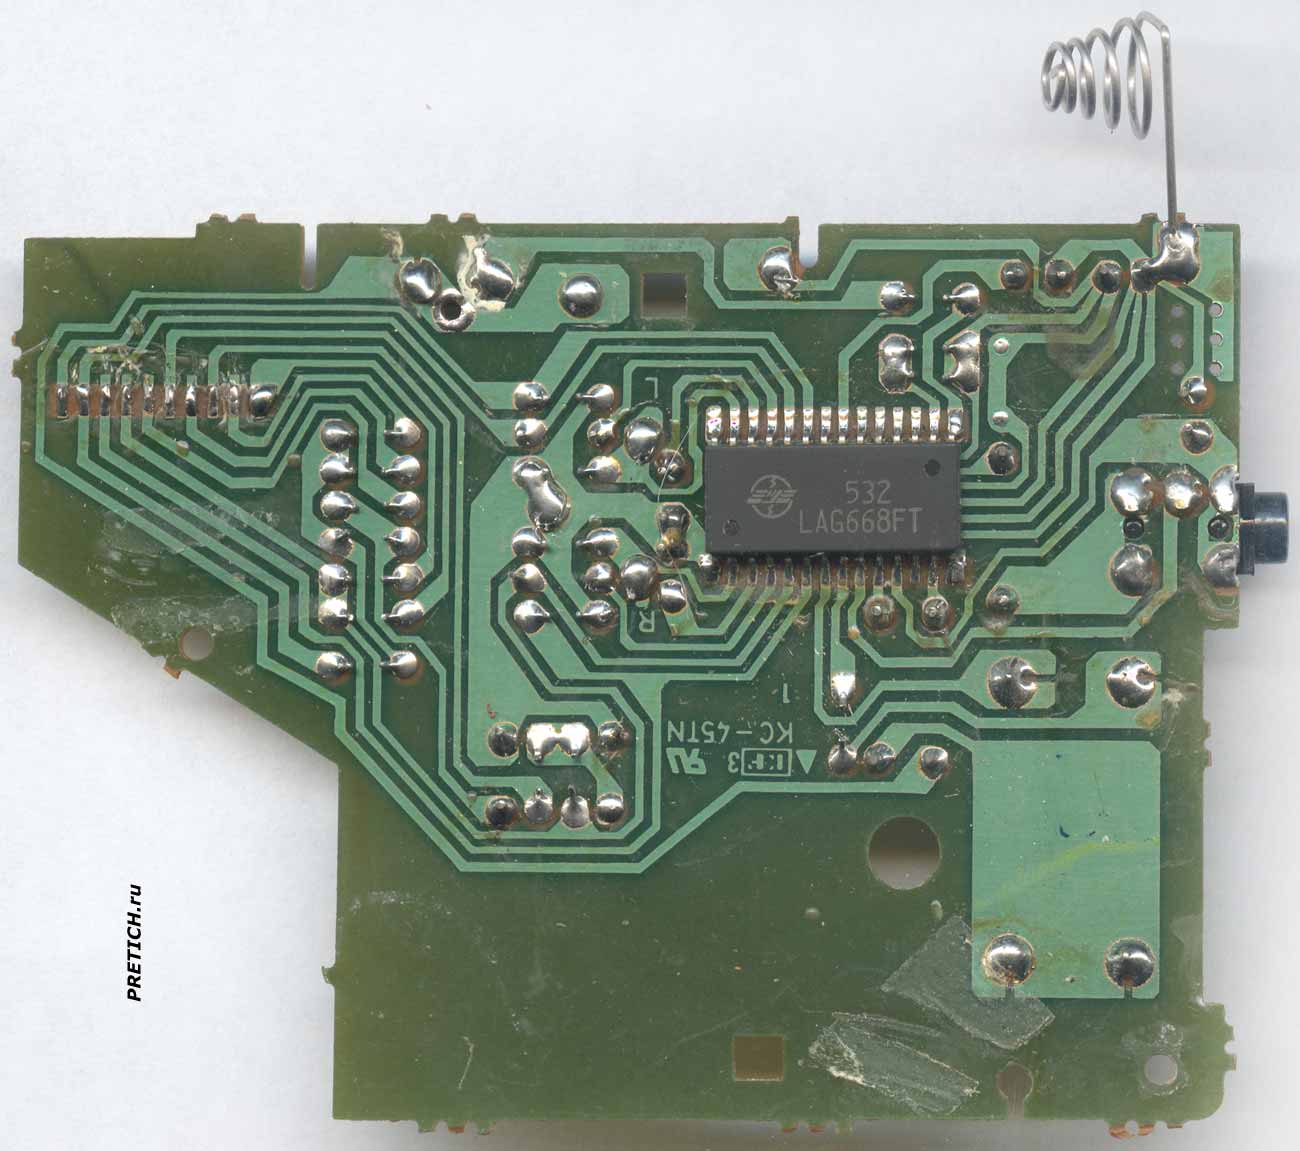 LAG668FT микросхема в плеере NINA W-13EQ